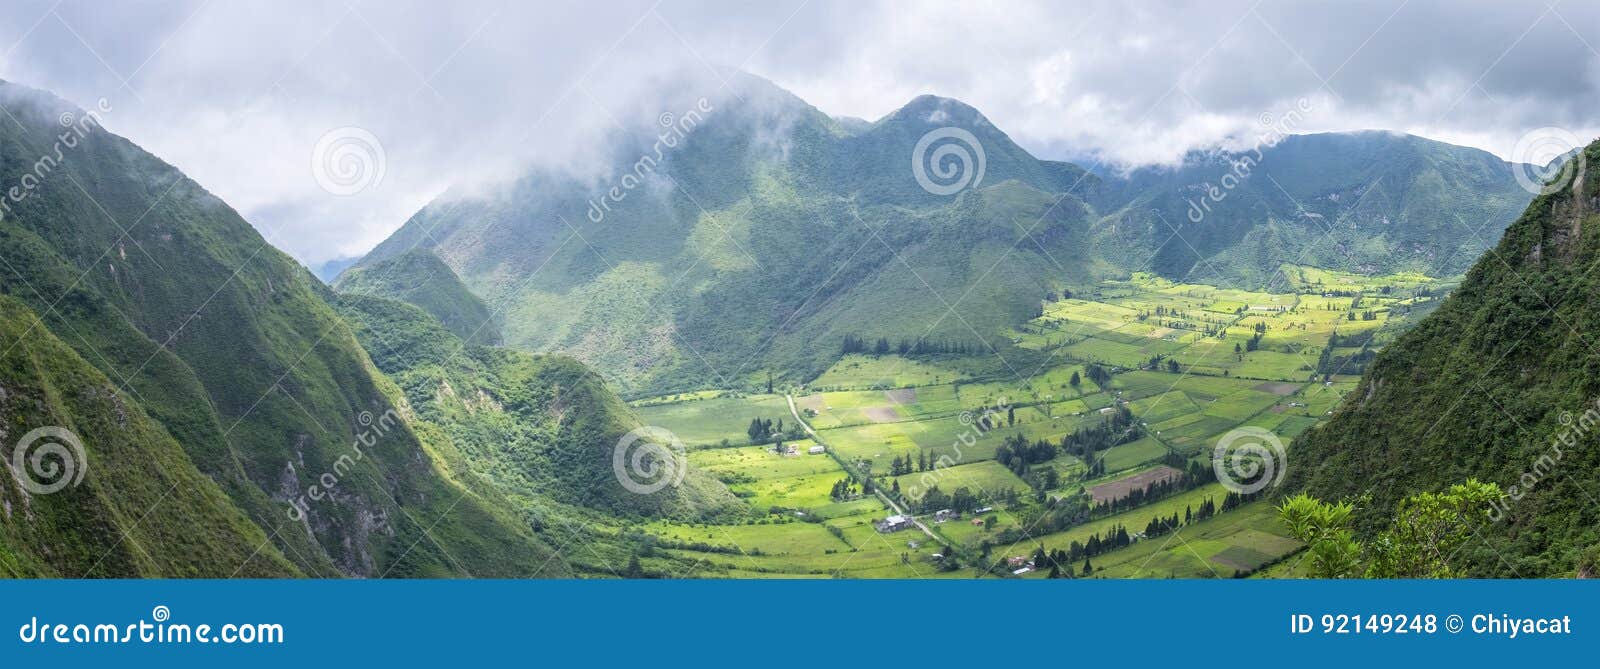 panoramic view of a dormant volcano north of quito, ecuador